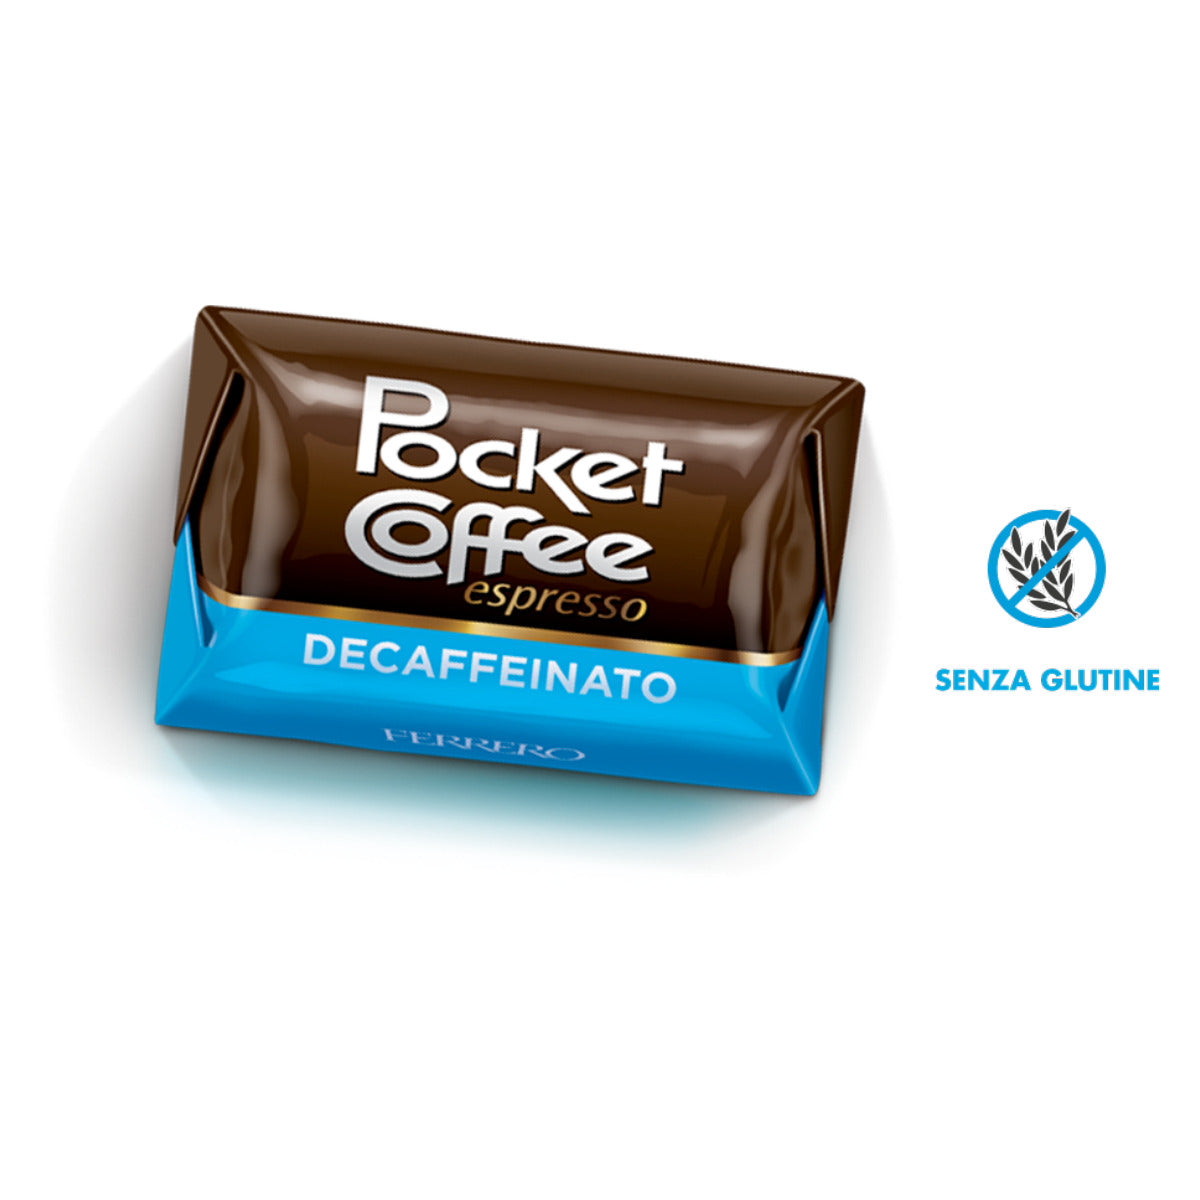 Pocket Coffee Espresso Chocolate Speciality Ferrero, 6 packs | German  Health&Beauty